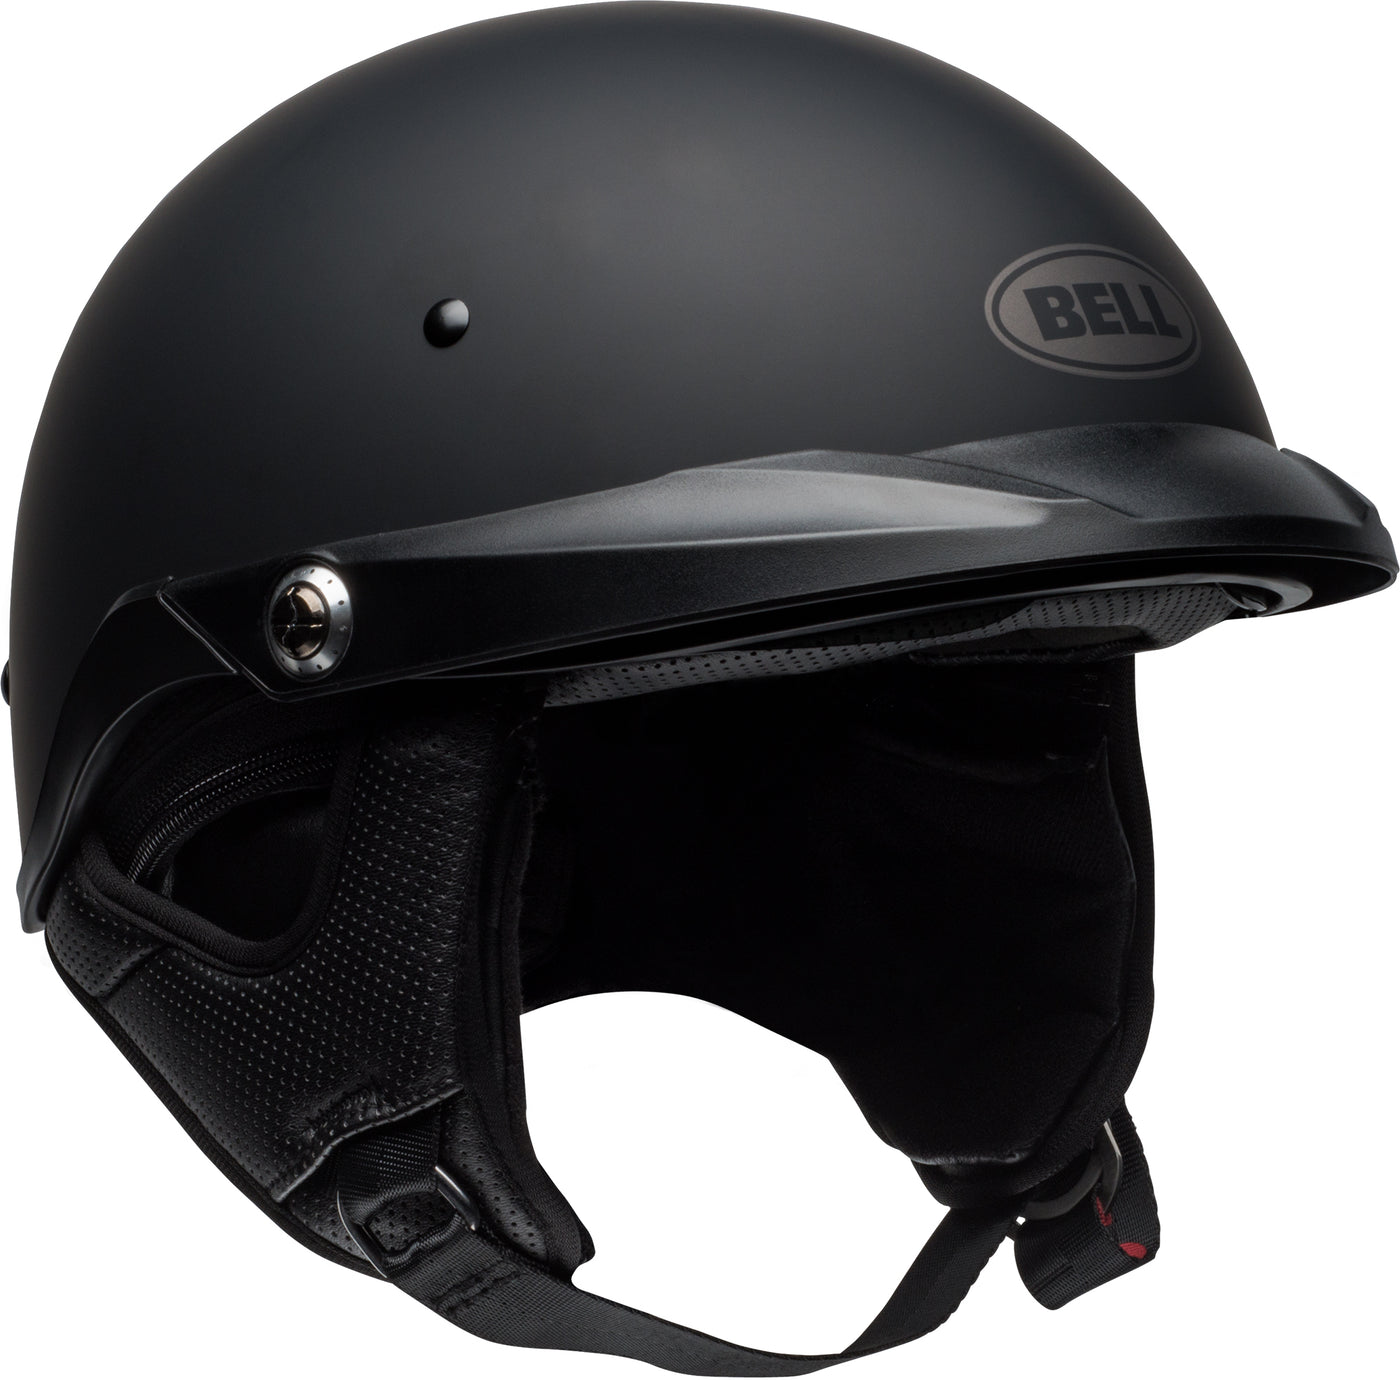 Bell Helmets Pit Boss - Matte Black